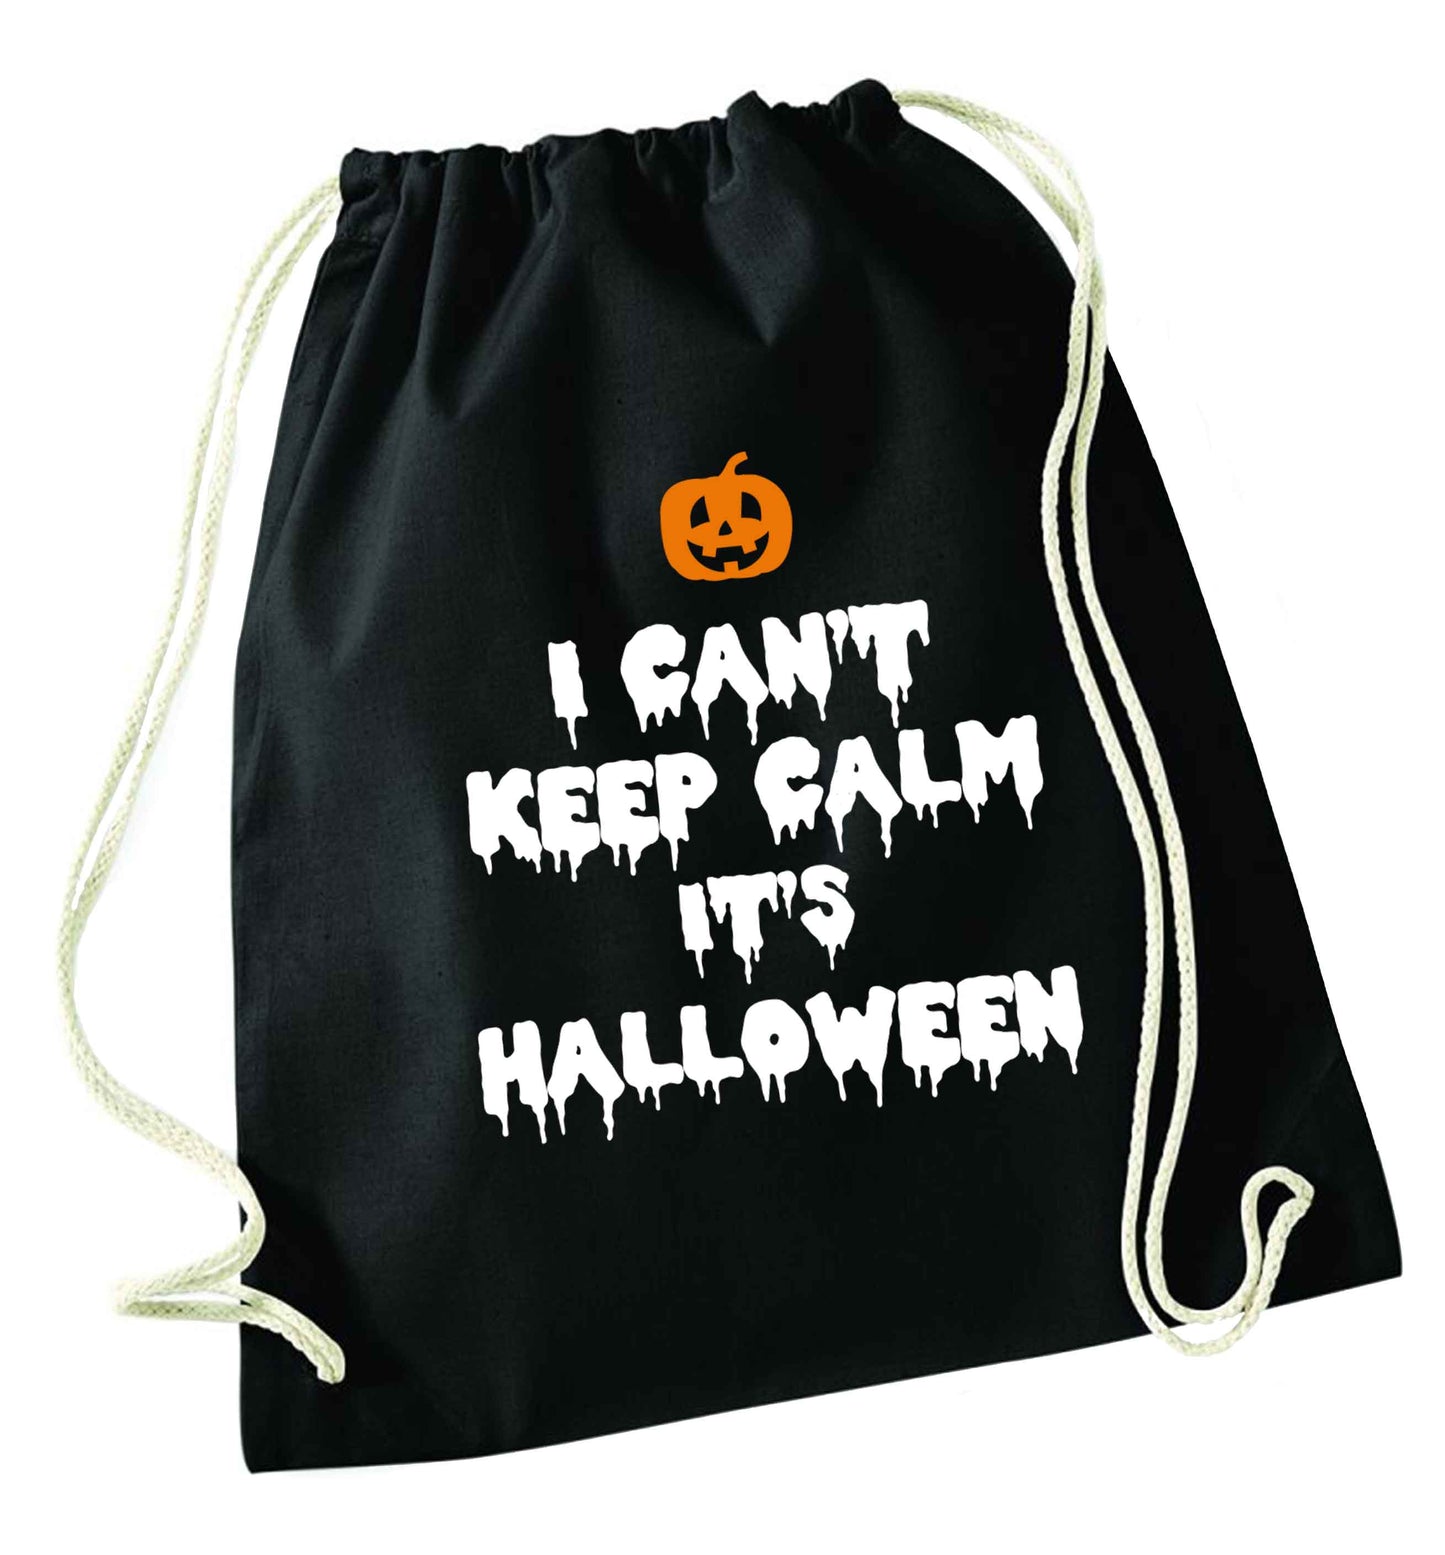 I can't keep calm it's halloween black drawstring bag